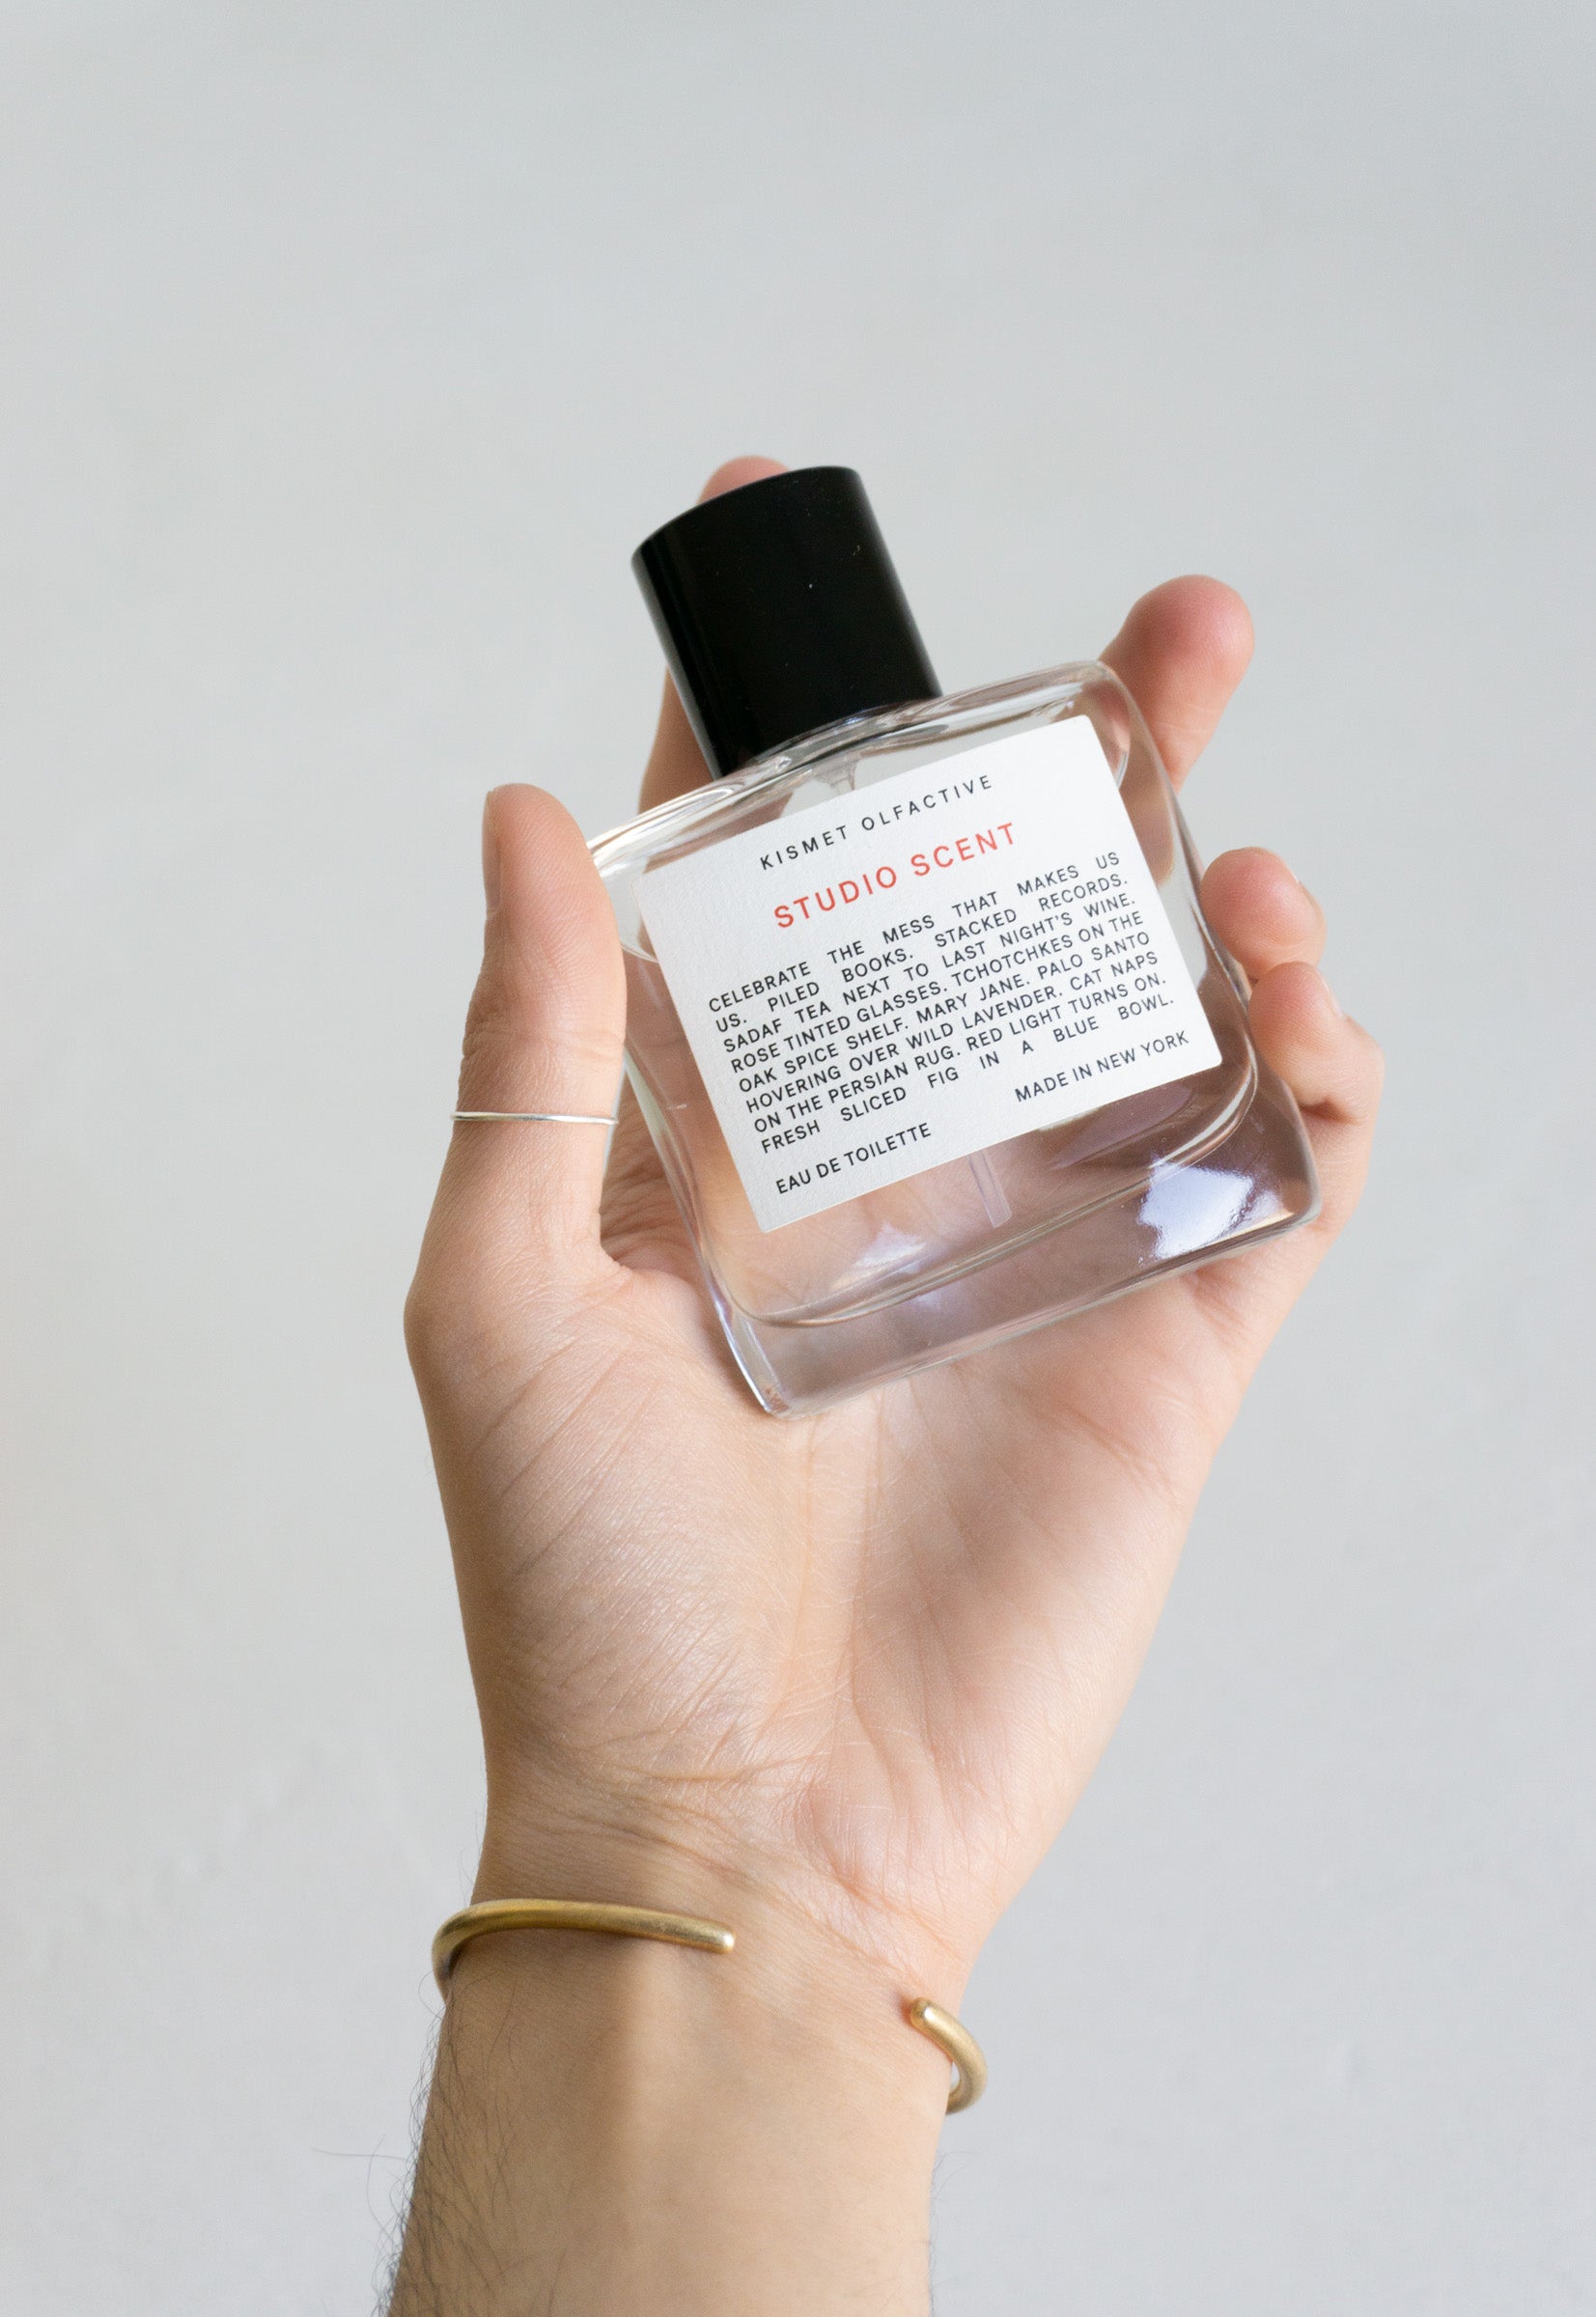 My sample set review of Kismet Olfactive fragrances. I have been